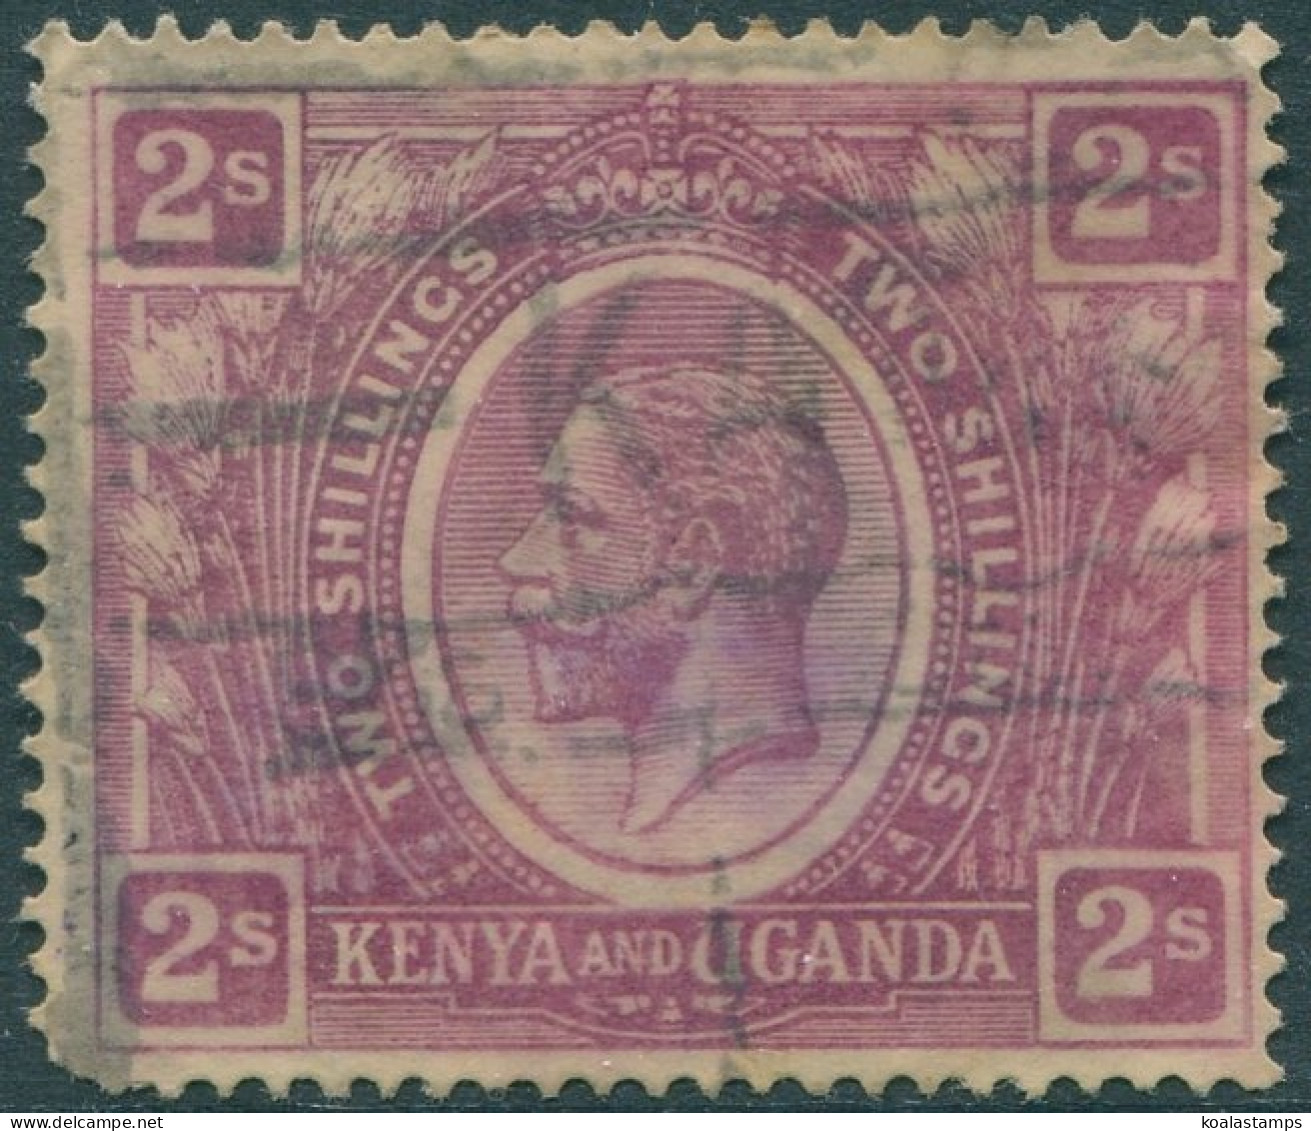 Kenya Uganda And Tanganyika 1922 SG88 2s Dull Purple FU (amd) - Kenya, Uganda & Tanganyika